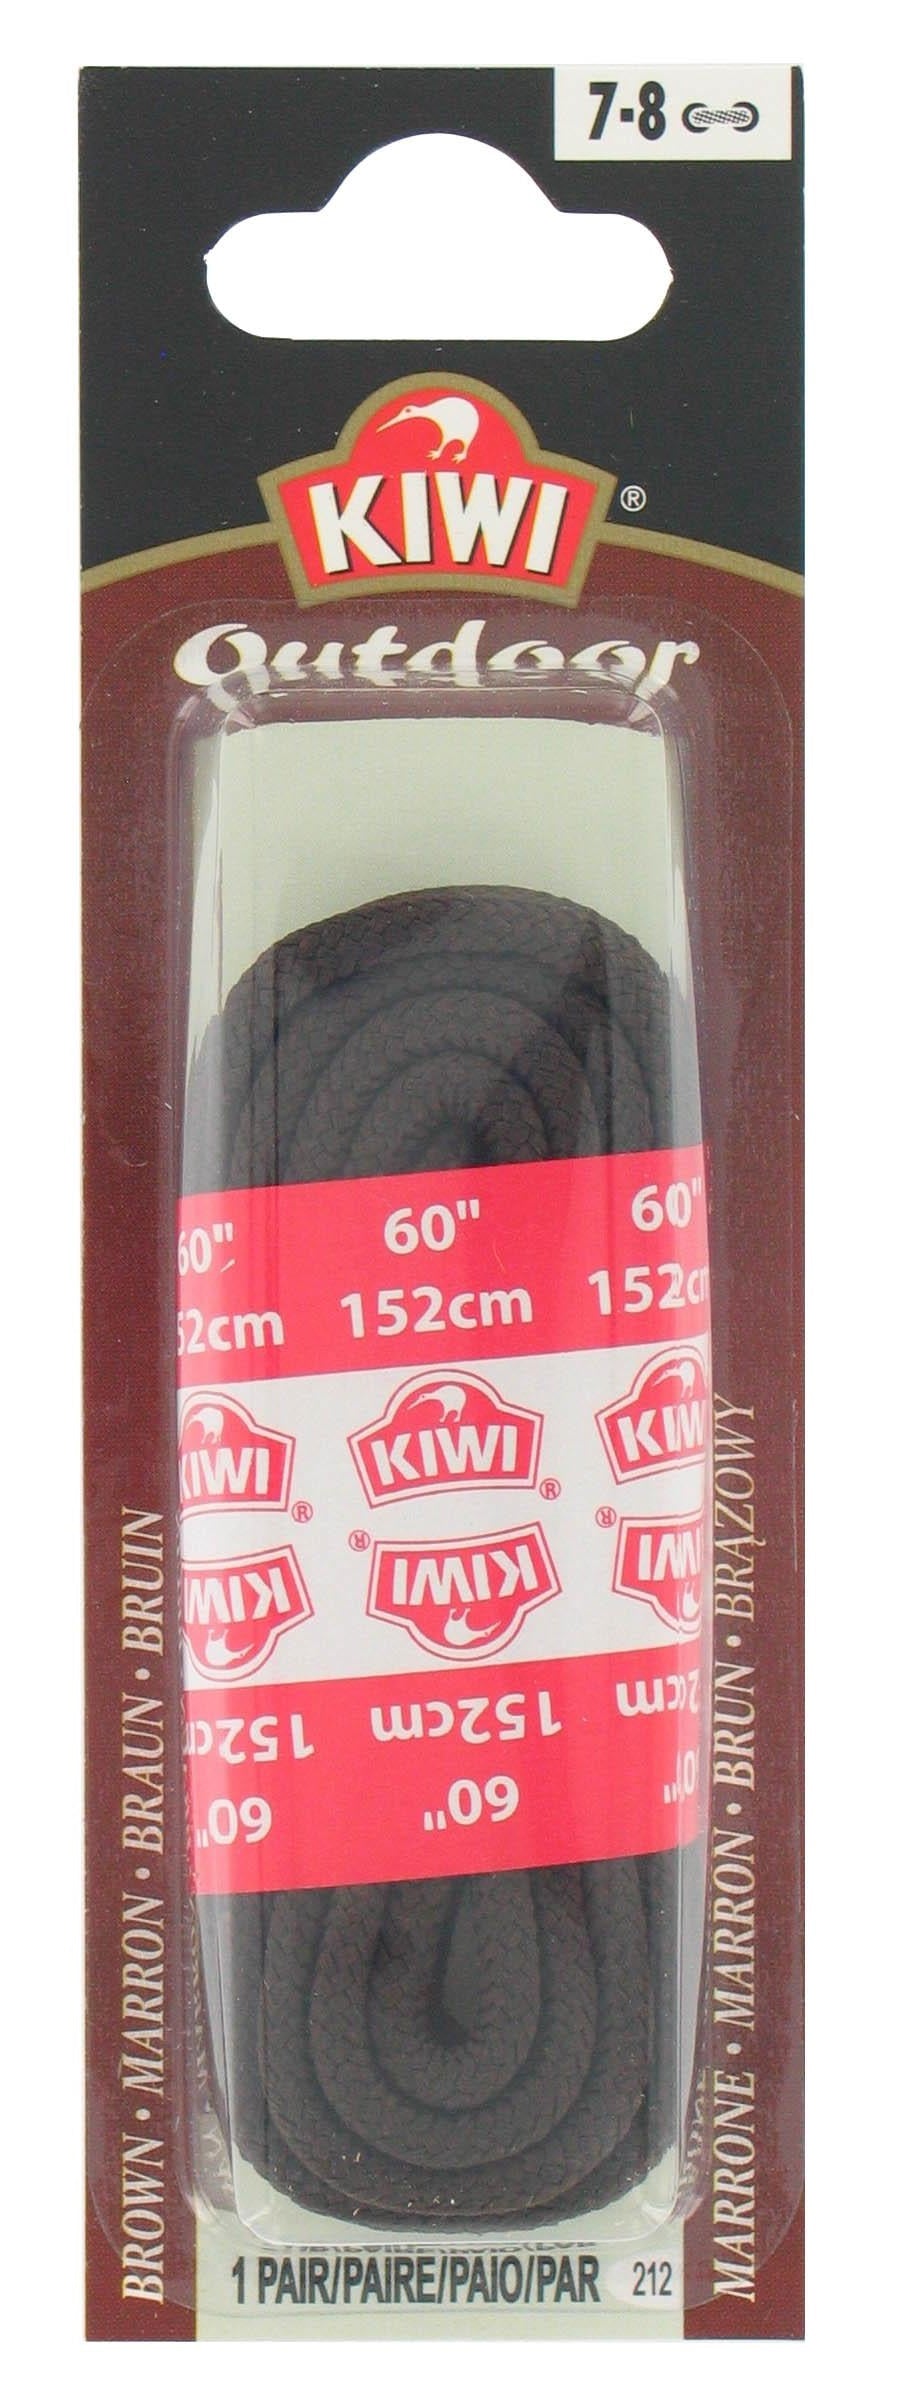 Kiwi 70451 Round Boot Lace, 60", Brown